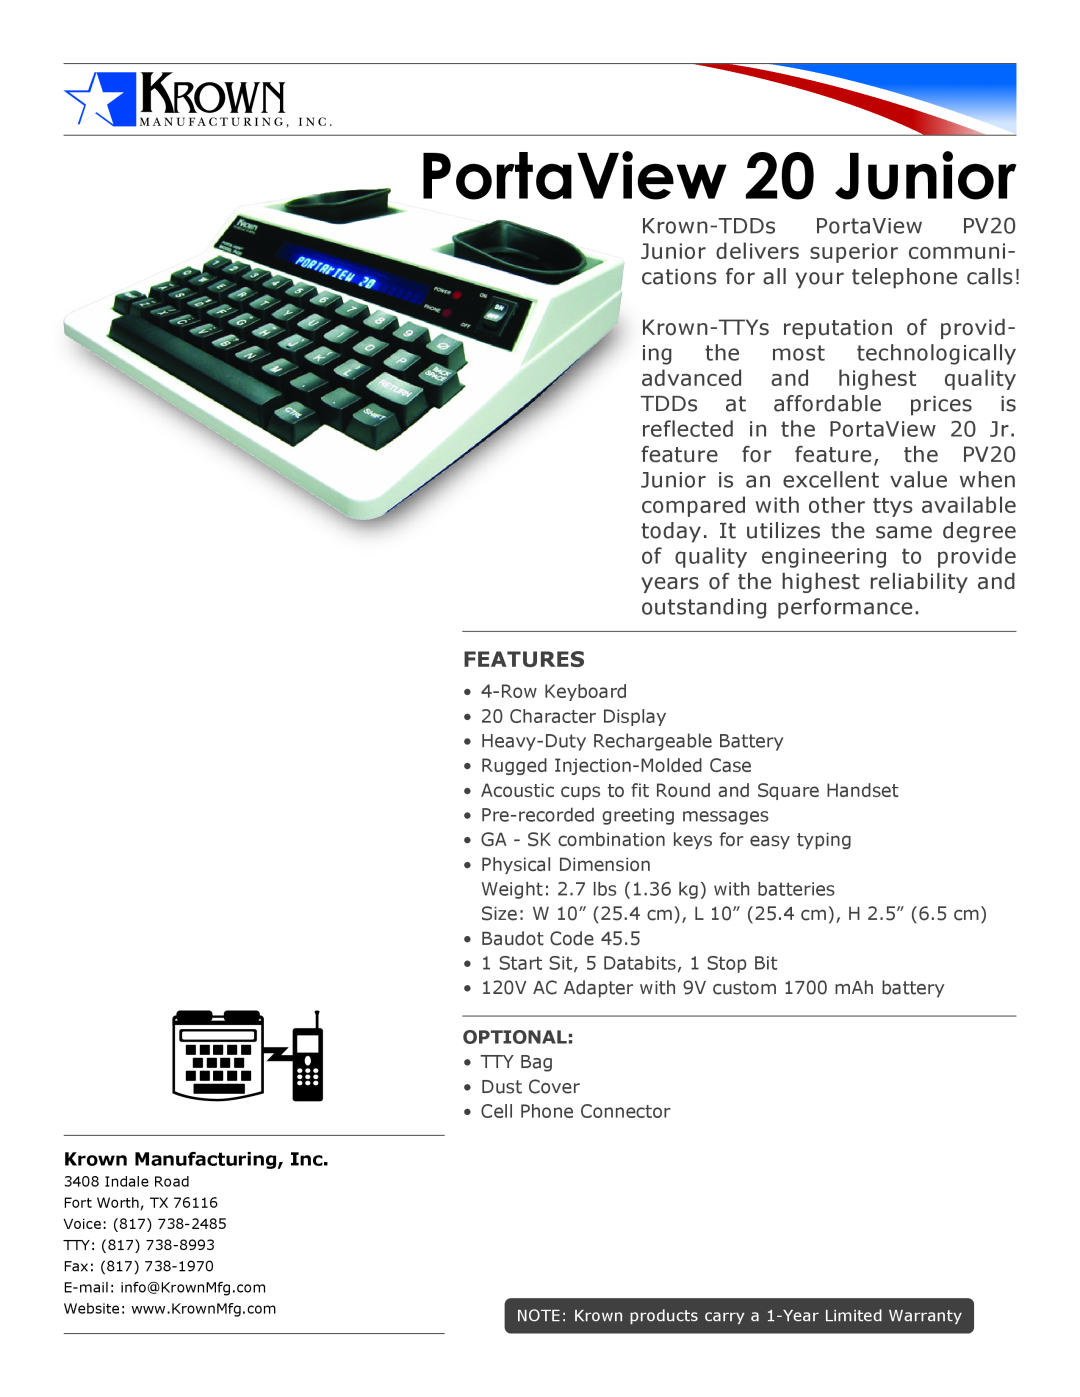 Krown Manufacturing PV20 warranty PortaView 20 Junior, Features 